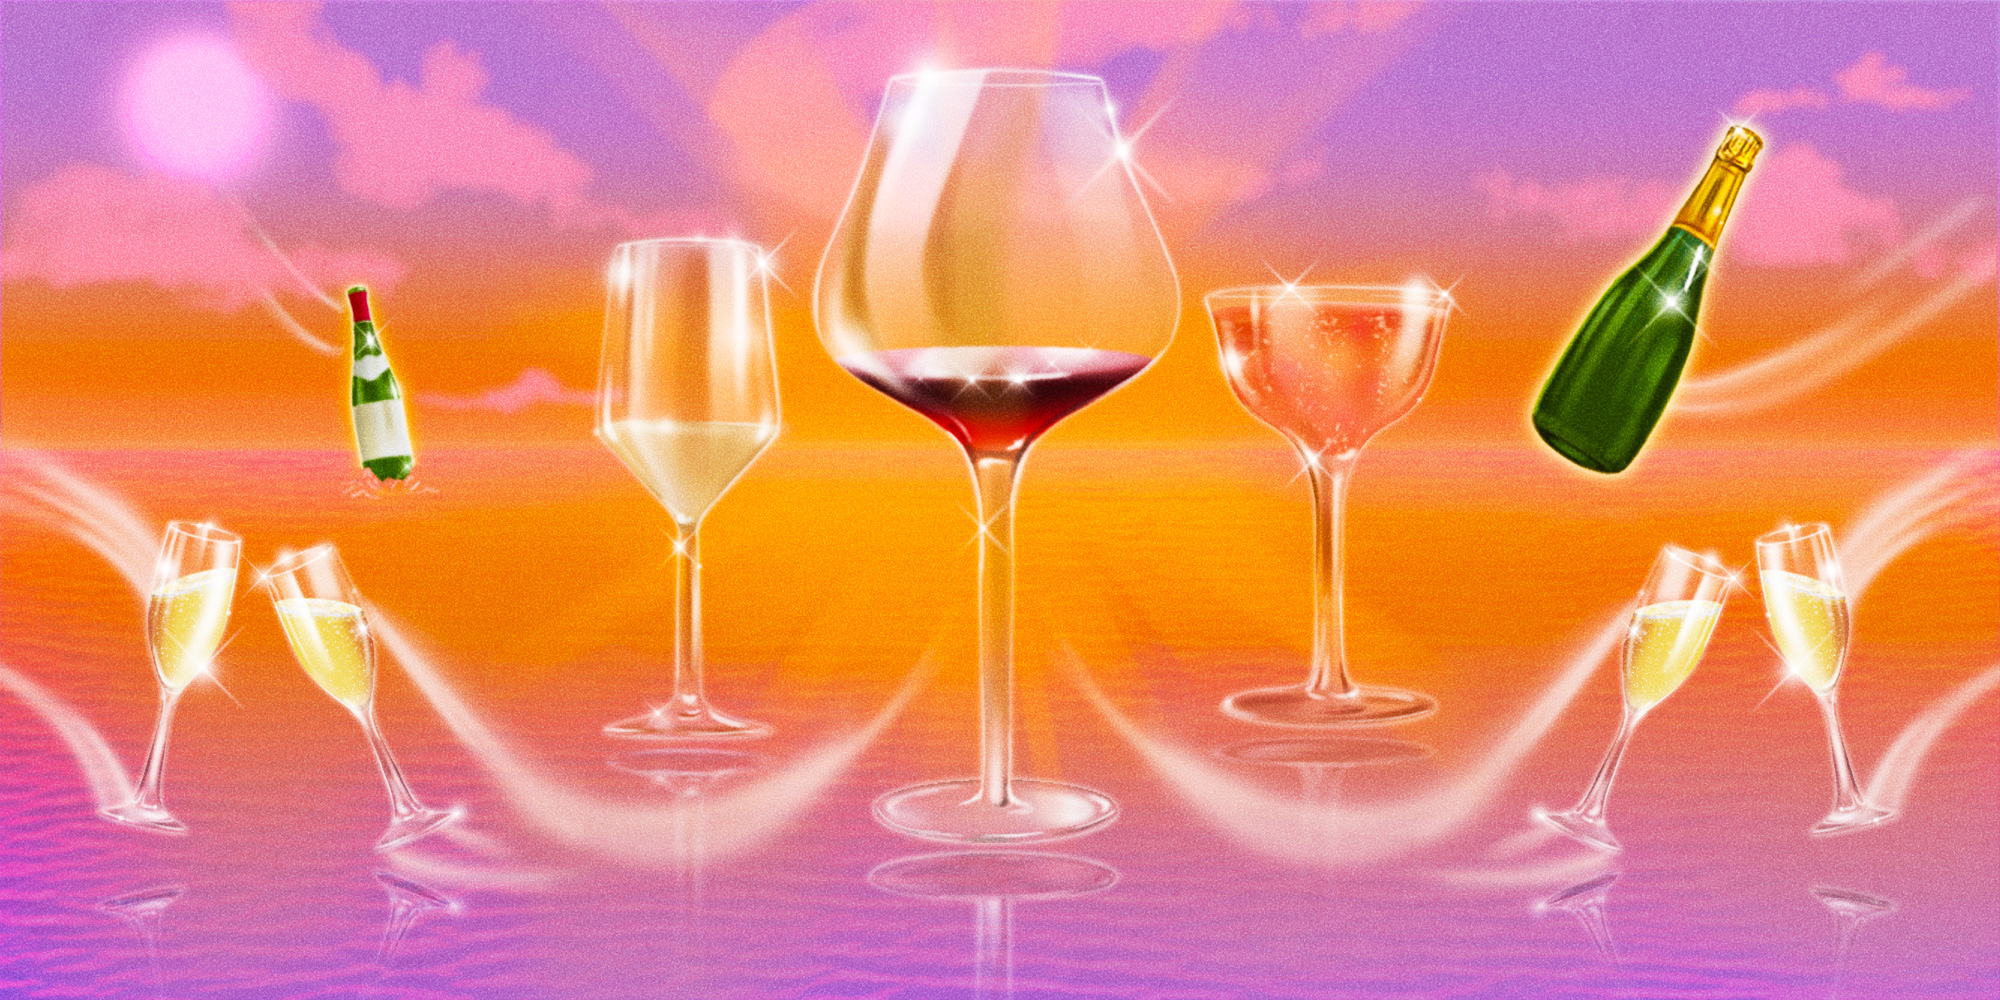 https://vinepair.com/wp-content/uploads/2022/11/50-best-wines-2022-header.jpg